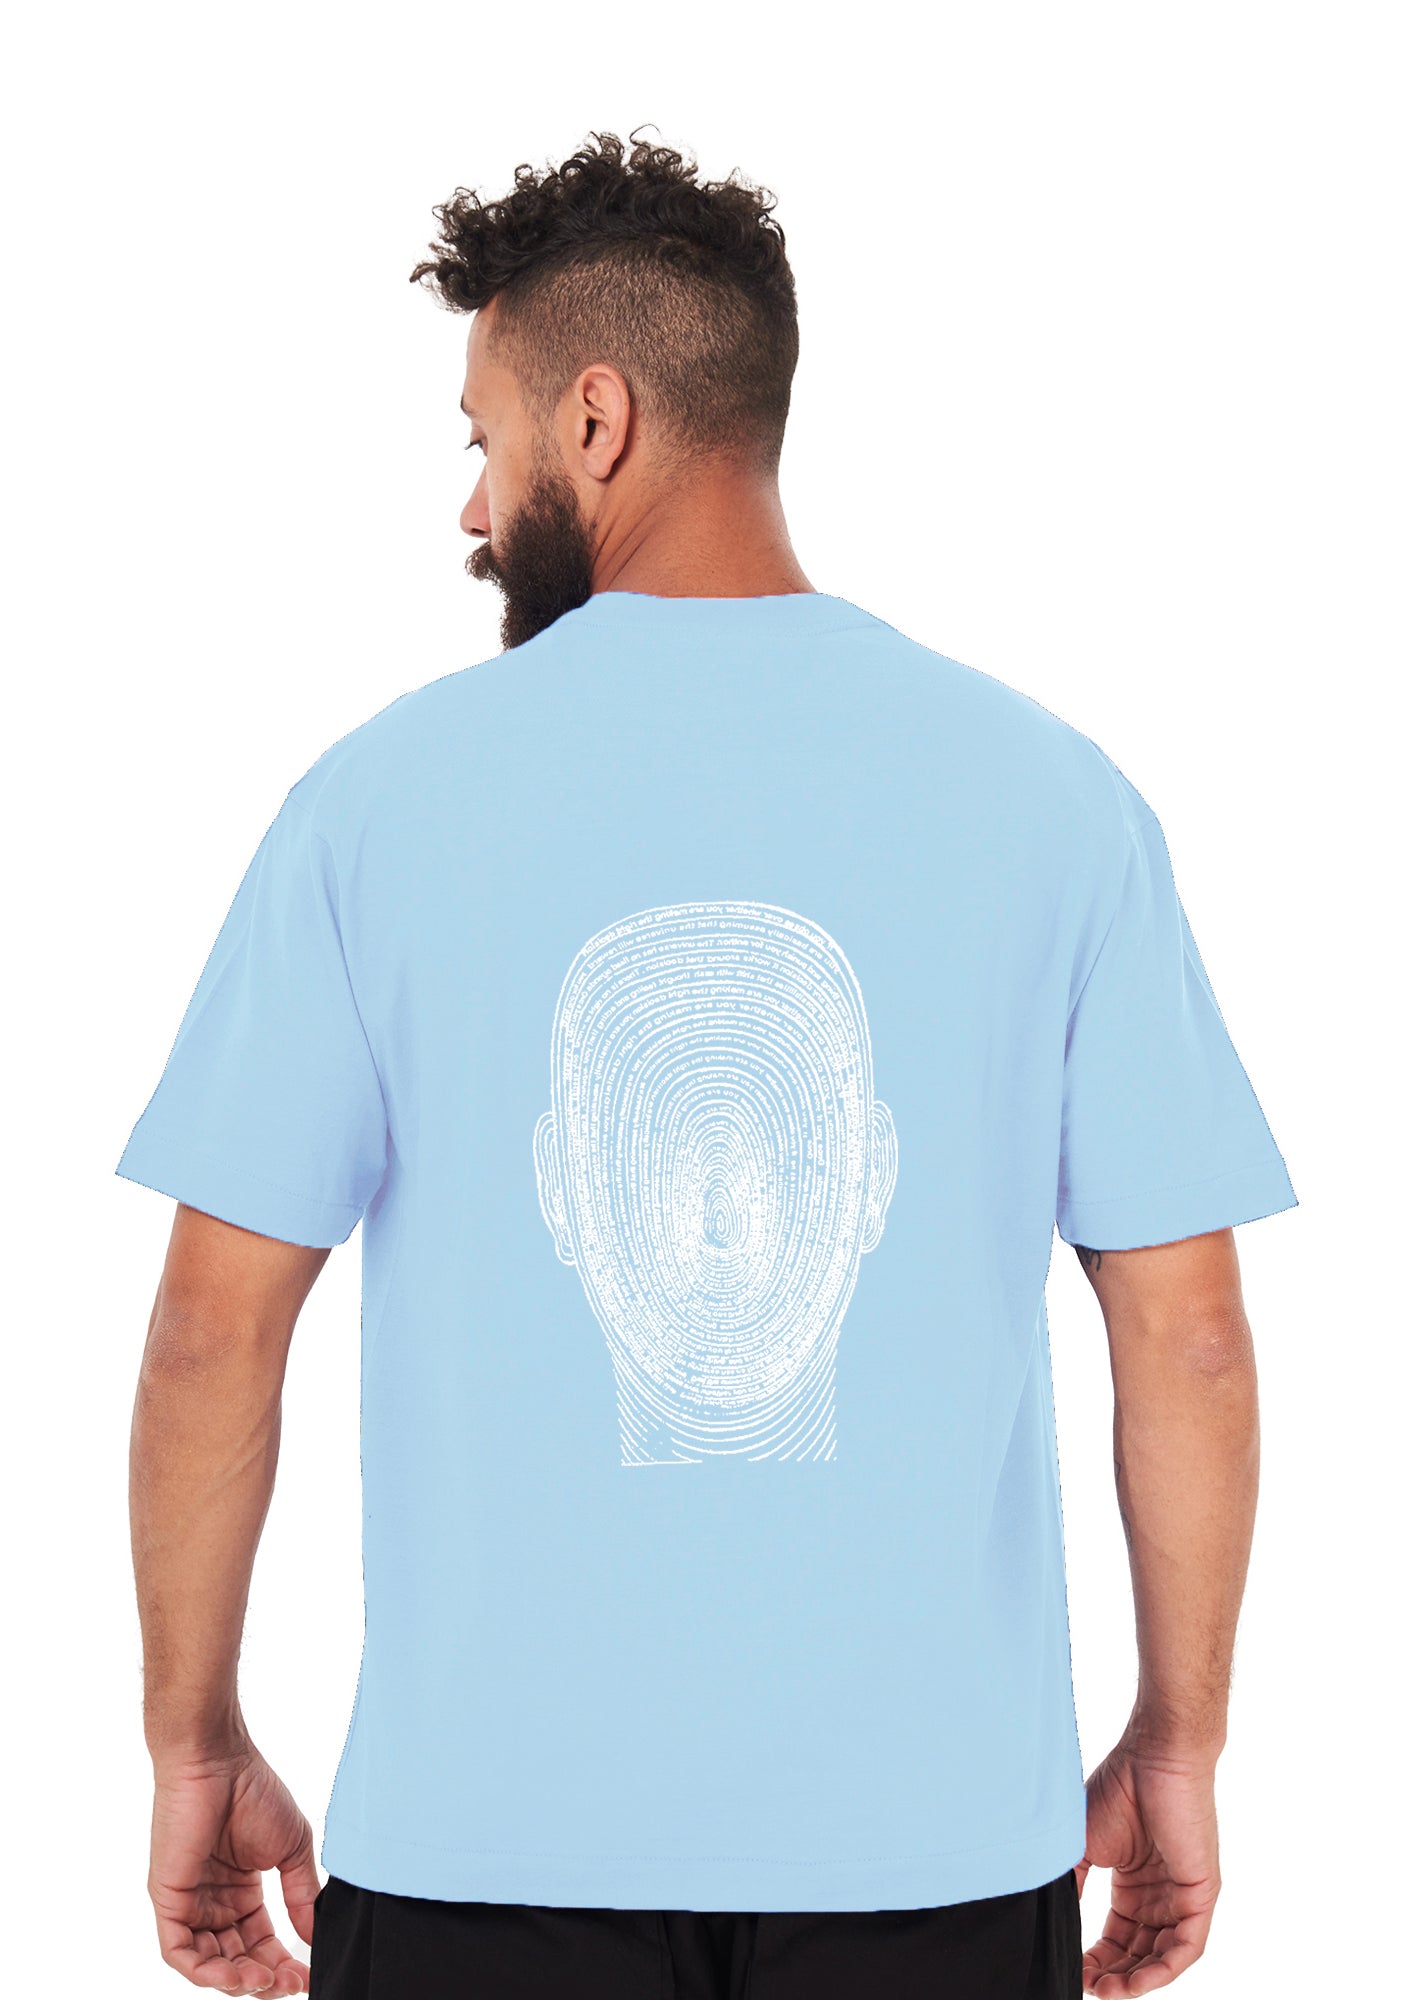 Signature Face Oversized printed Sky blue T-shirt .